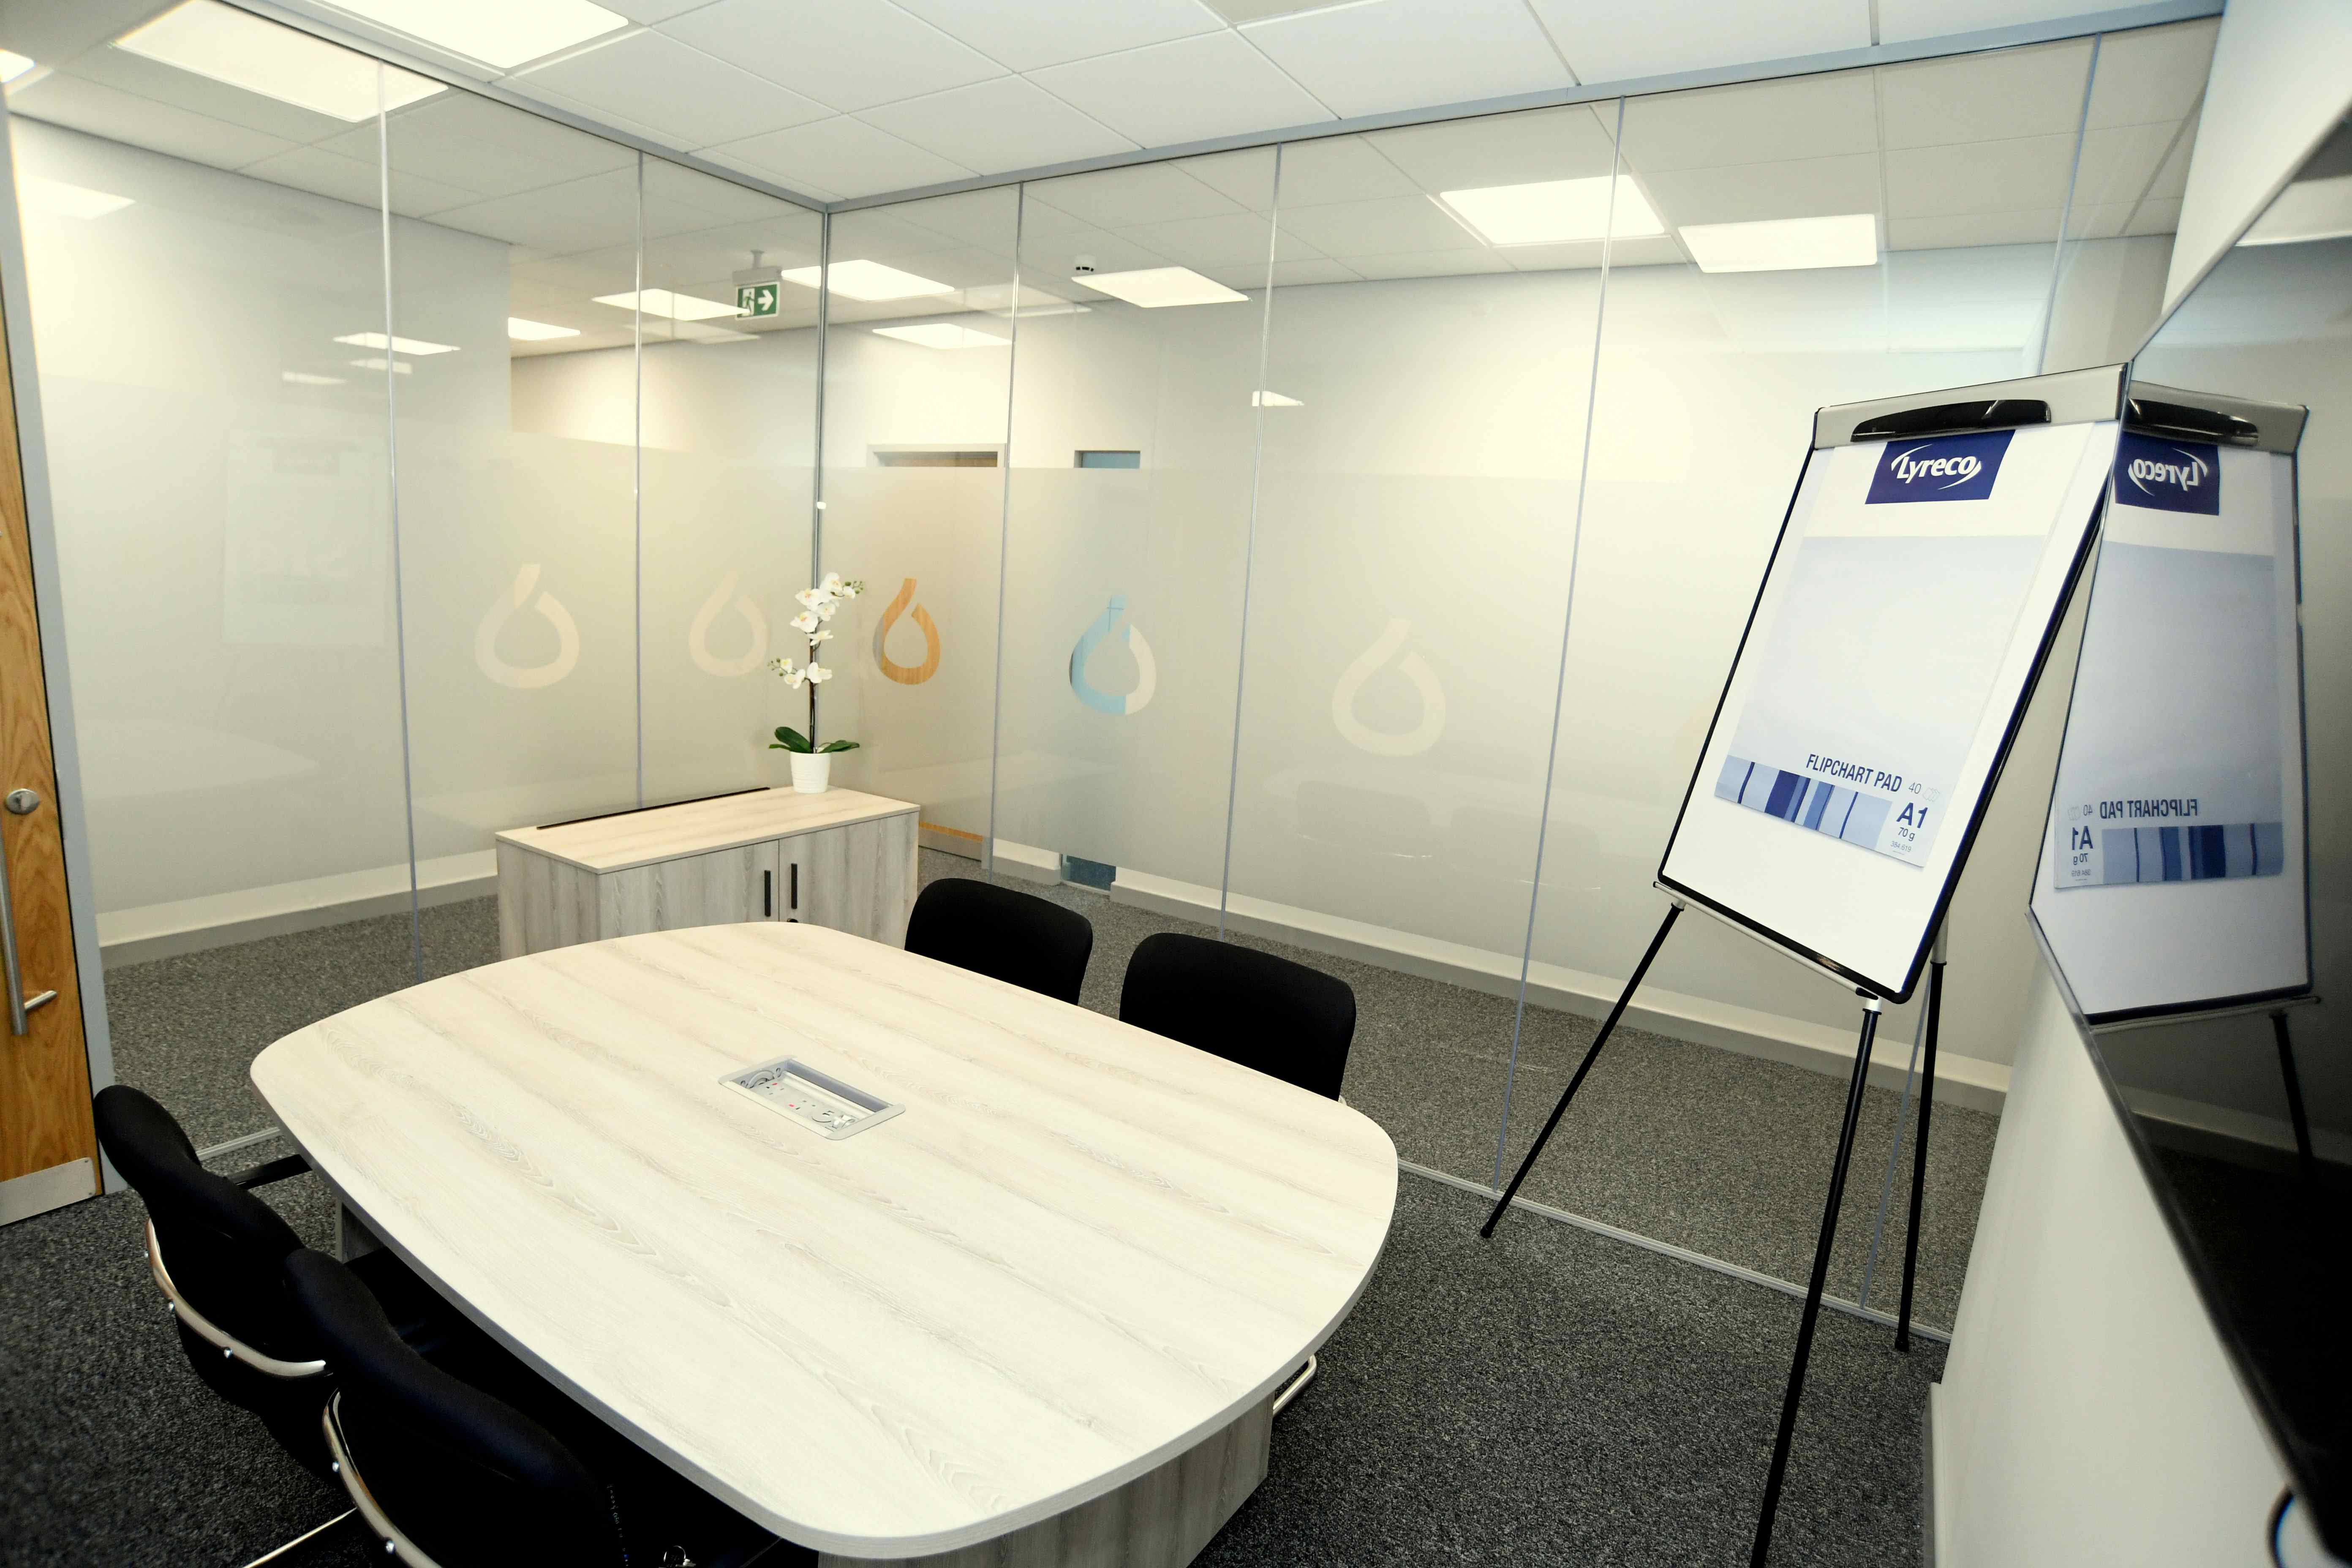 Sierra Meeting Room, FigFlex Coventry